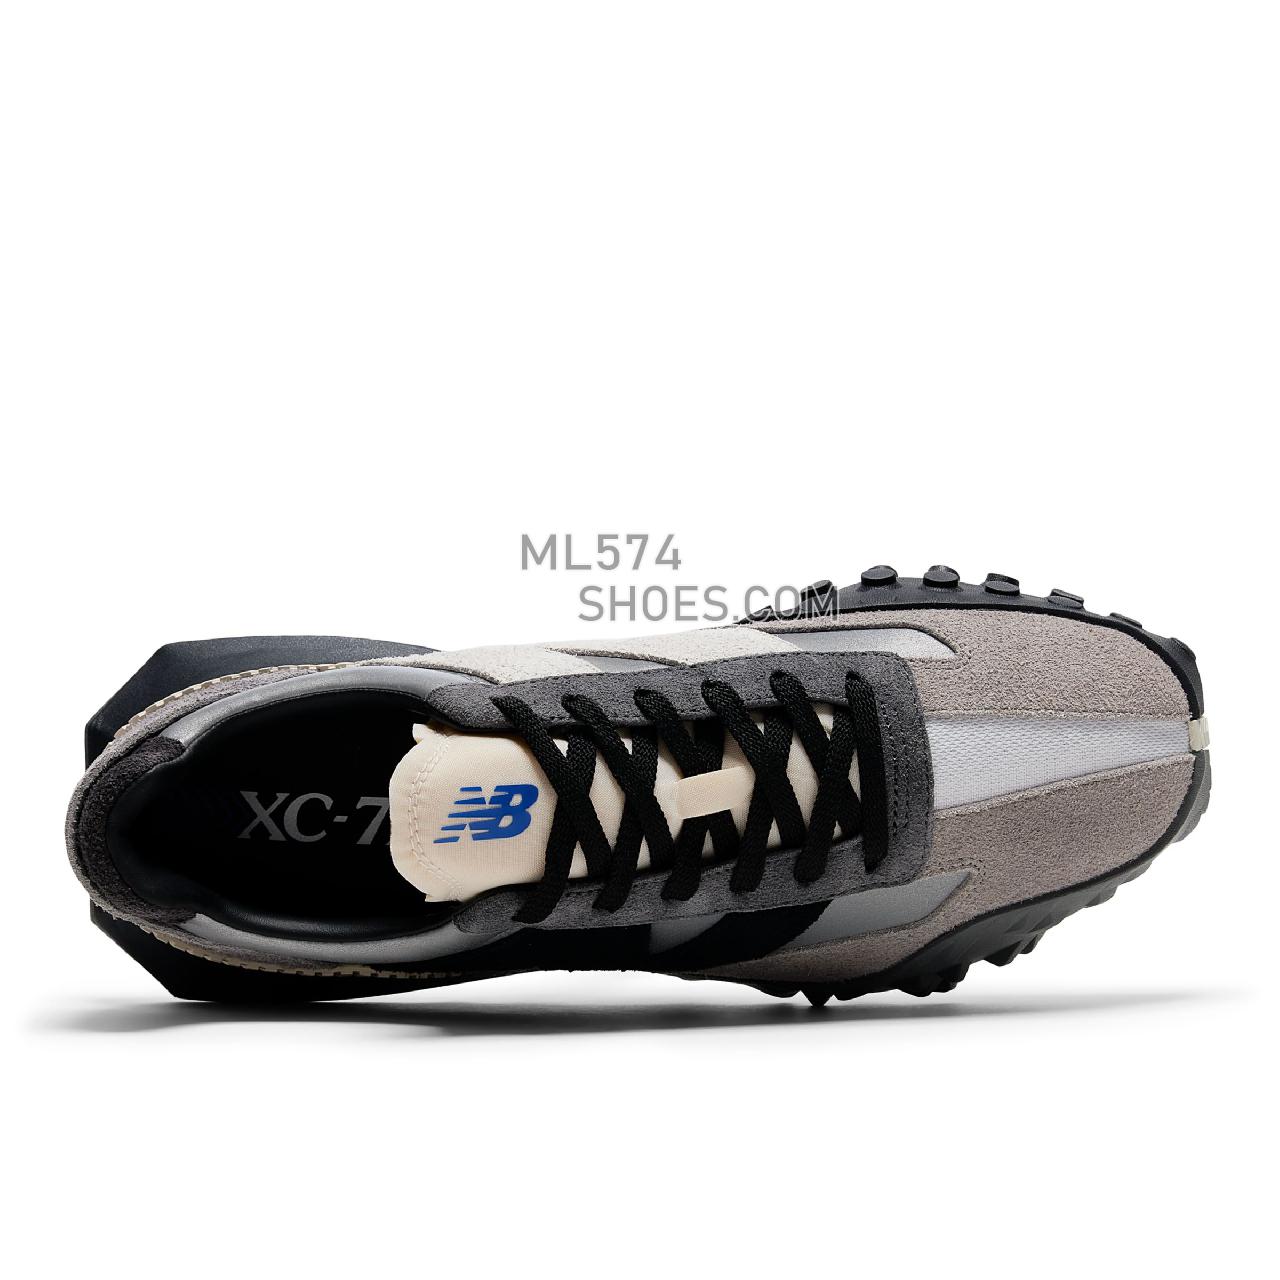 New Balance XC-72 - Unisex Men's Women's Sport Style Sneakers - Castlerock with Black - UXC72AA1